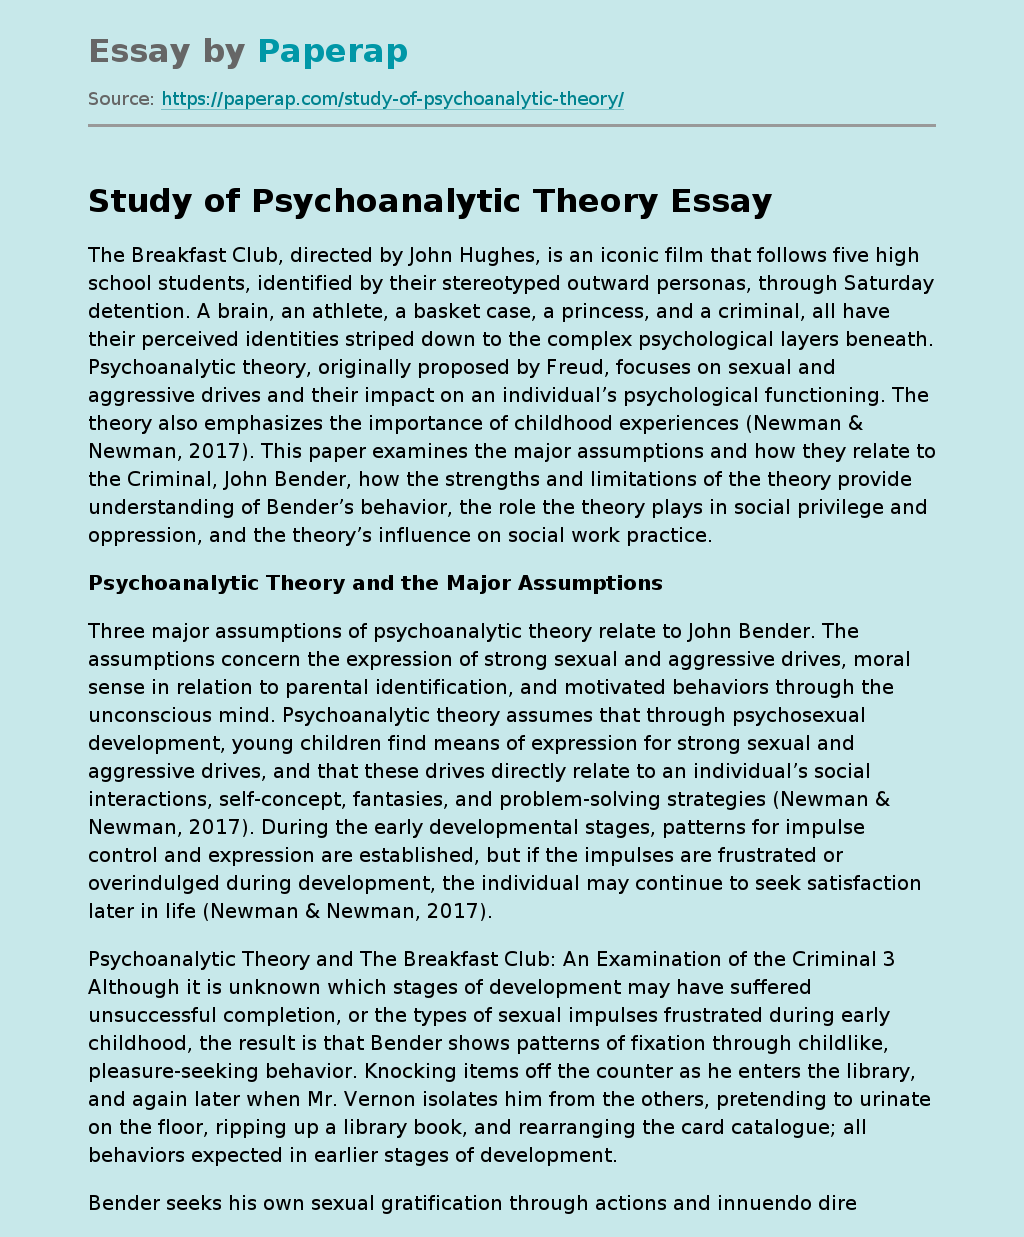 Study of Psychoanalytic Theory